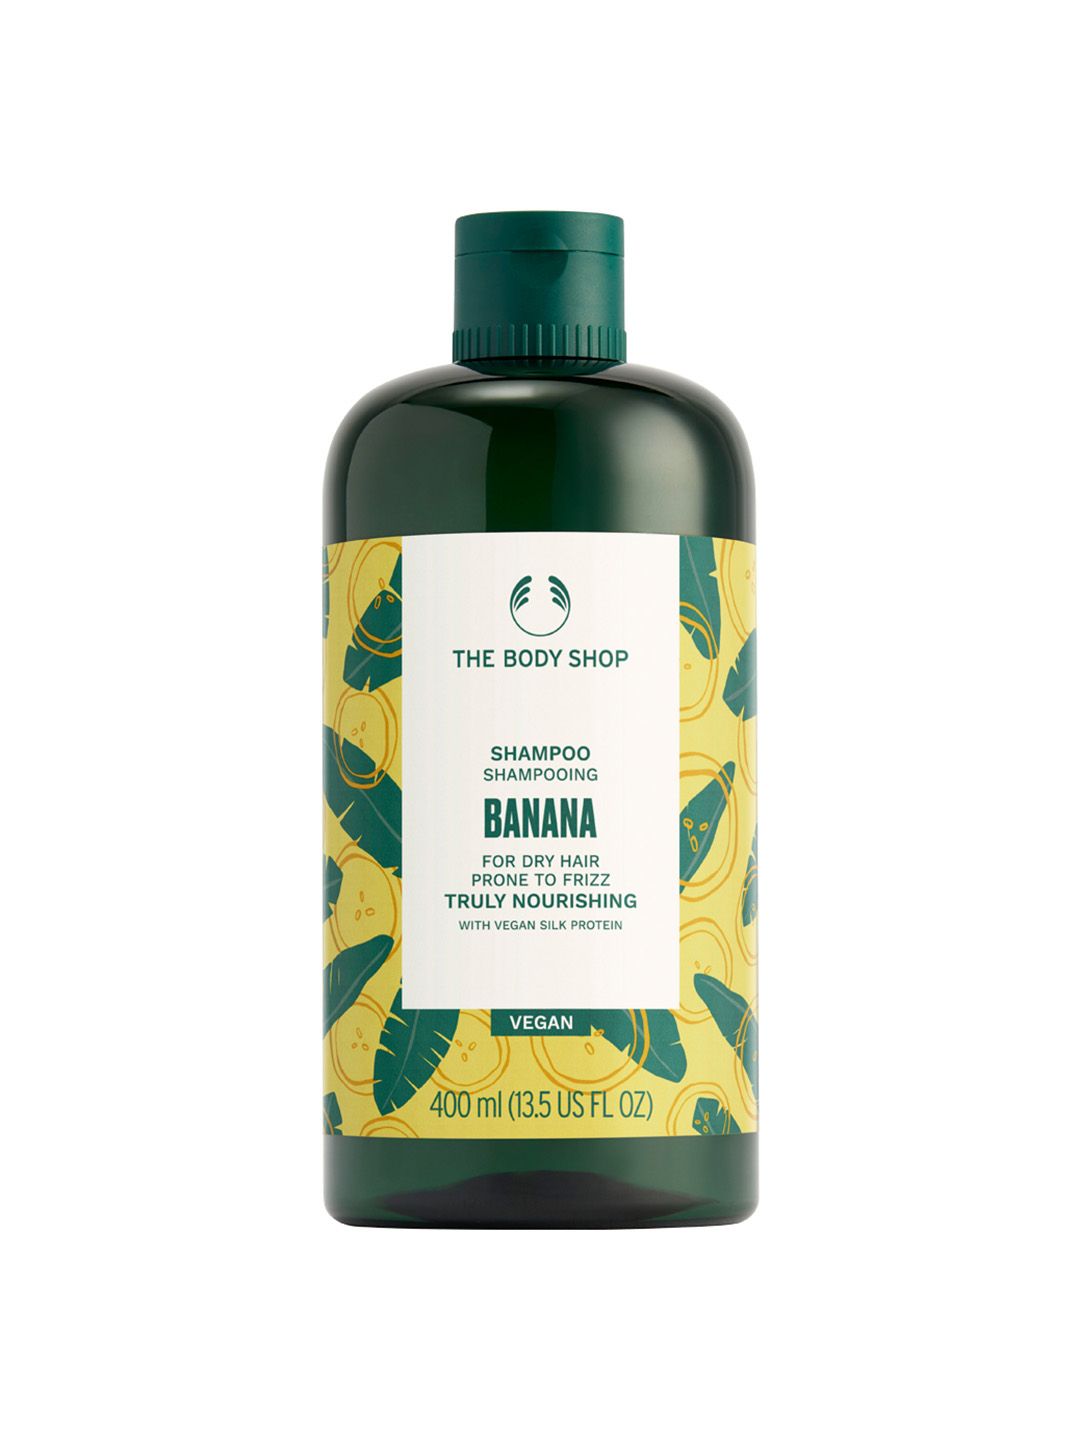 THE BODY SHOP  Banana Truly Nourishing Sustainable Shampoo 400 ml Price in India